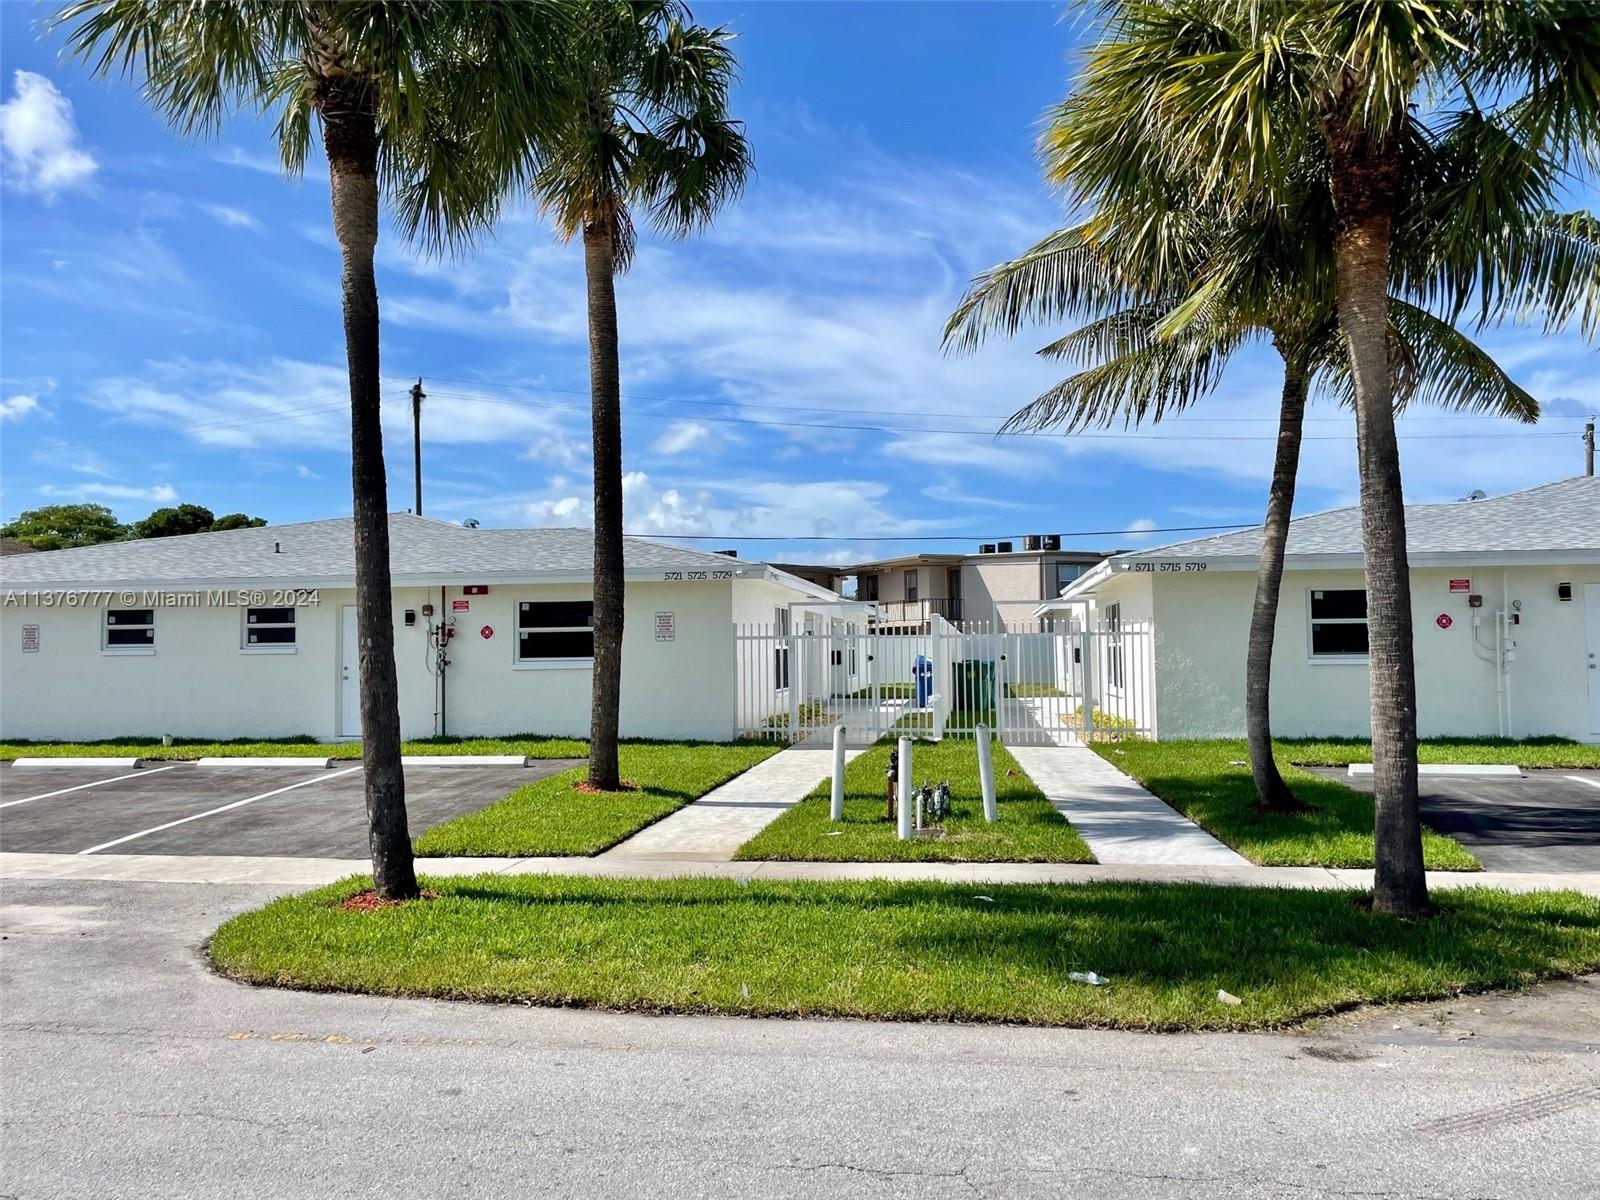 Rental Property at 5701 Nw 28th St, Lauderhill, Miami-Dade County, Florida -  - $1,026,000 MO.